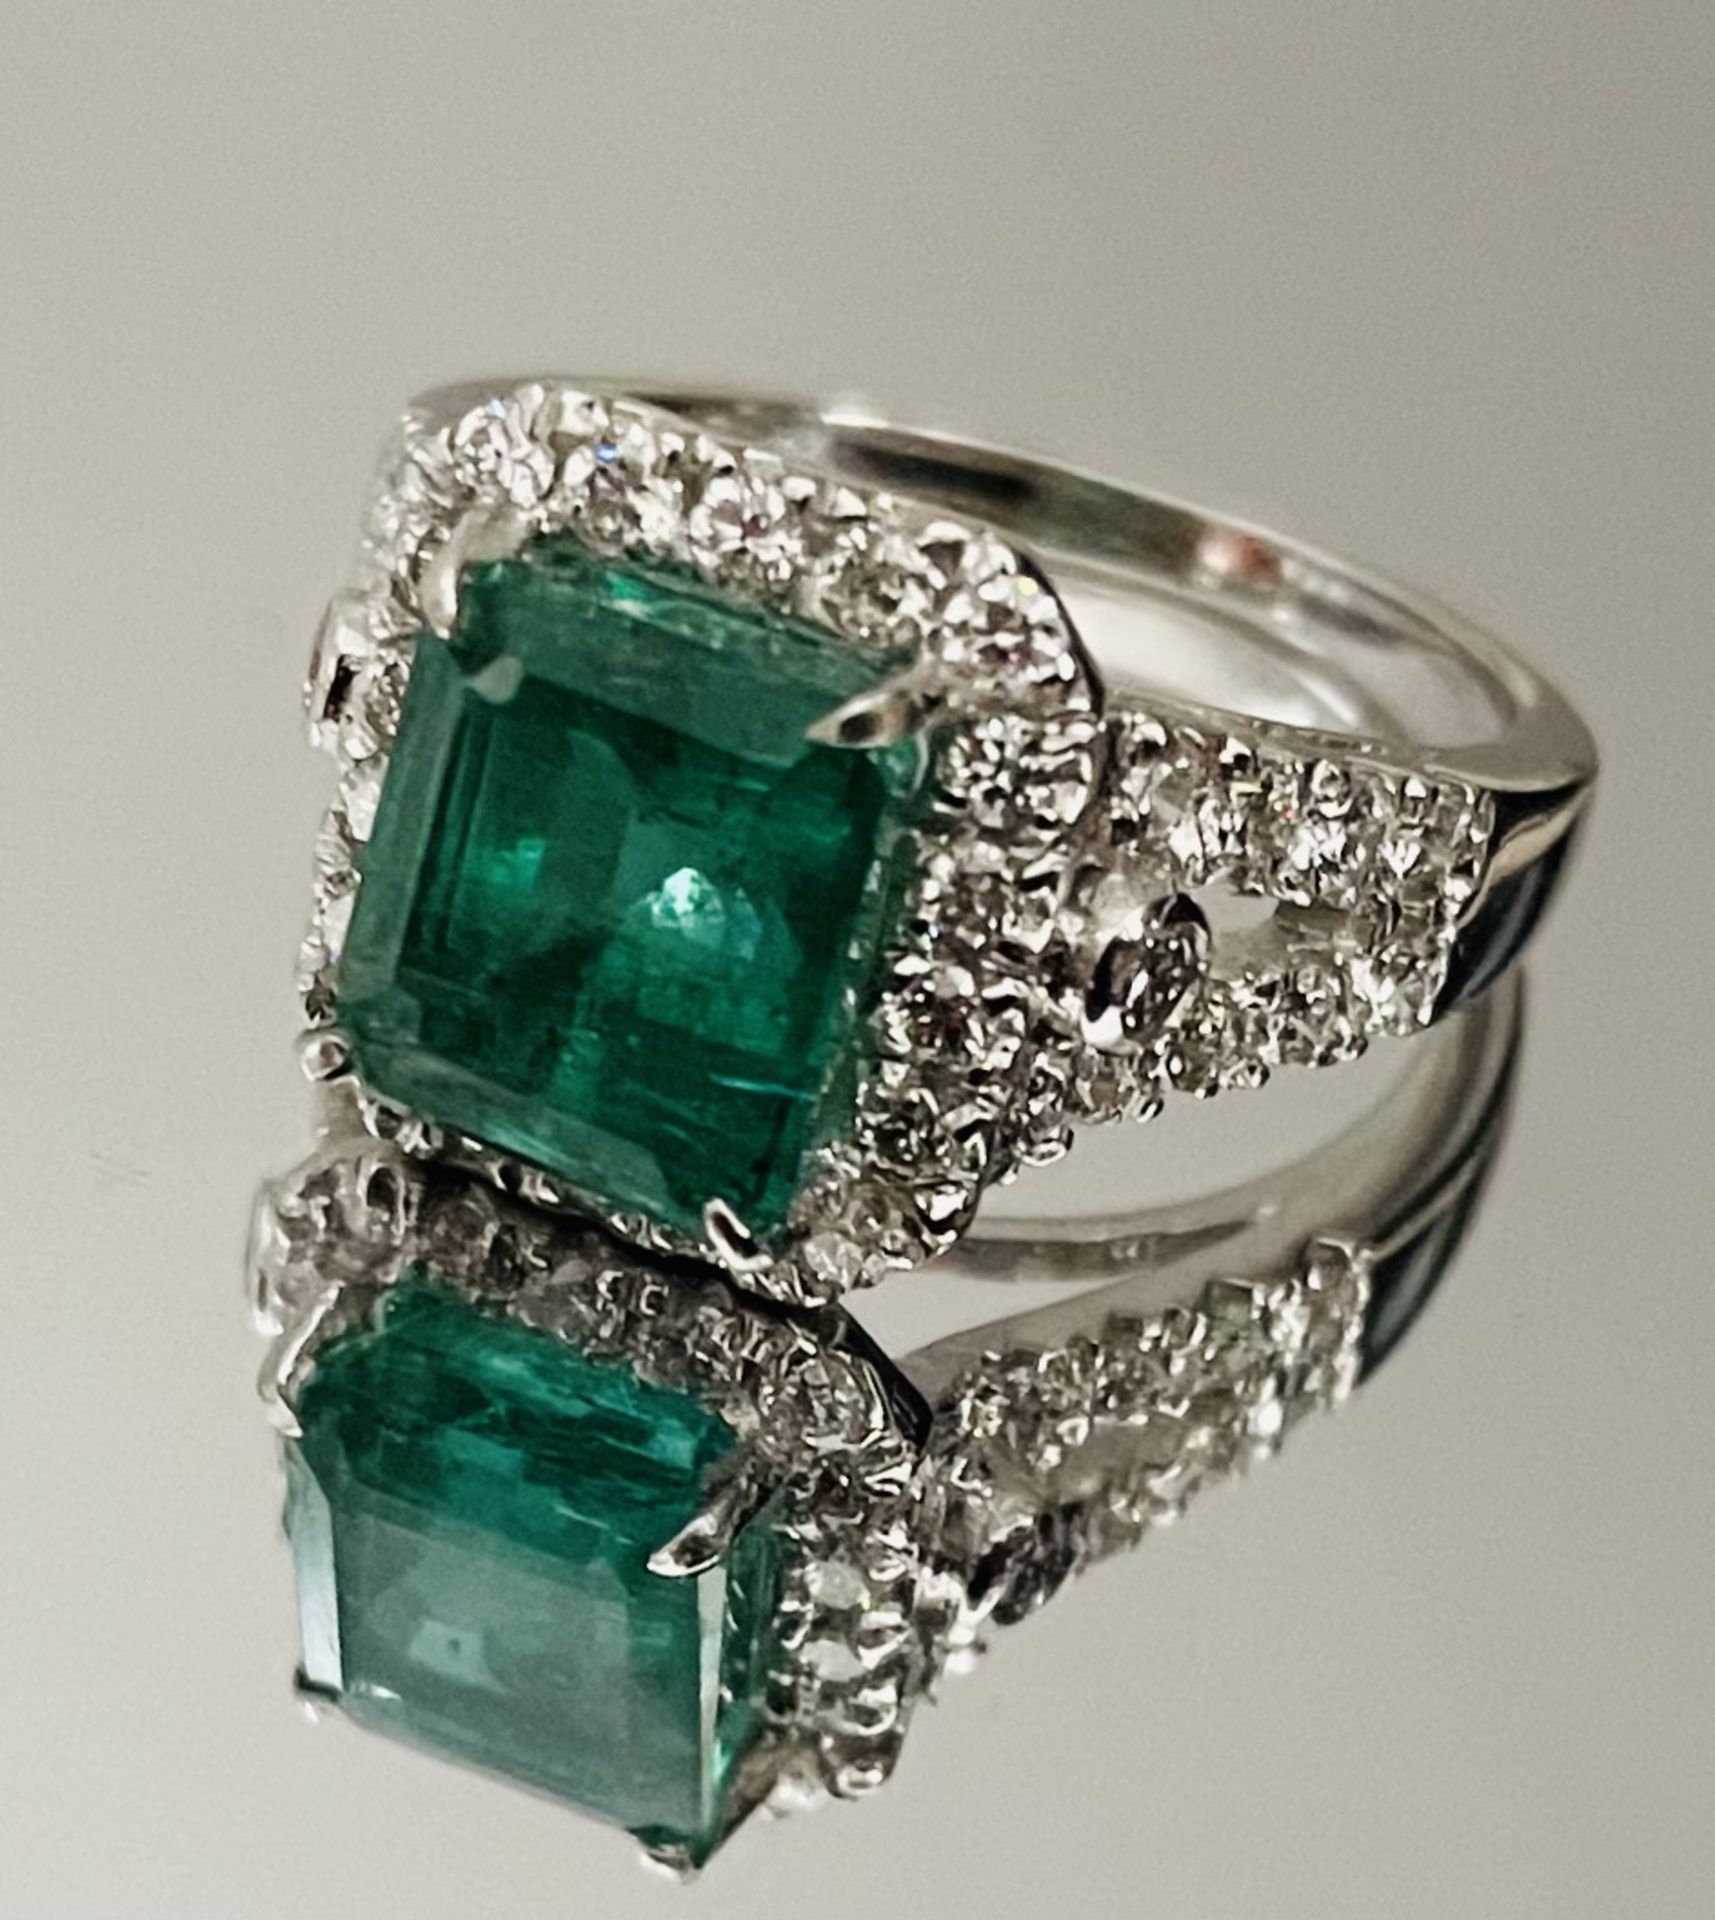 3.49 Carats Zambian Emerald With Natural Diamonds & 18k White Gold - Image 6 of 6